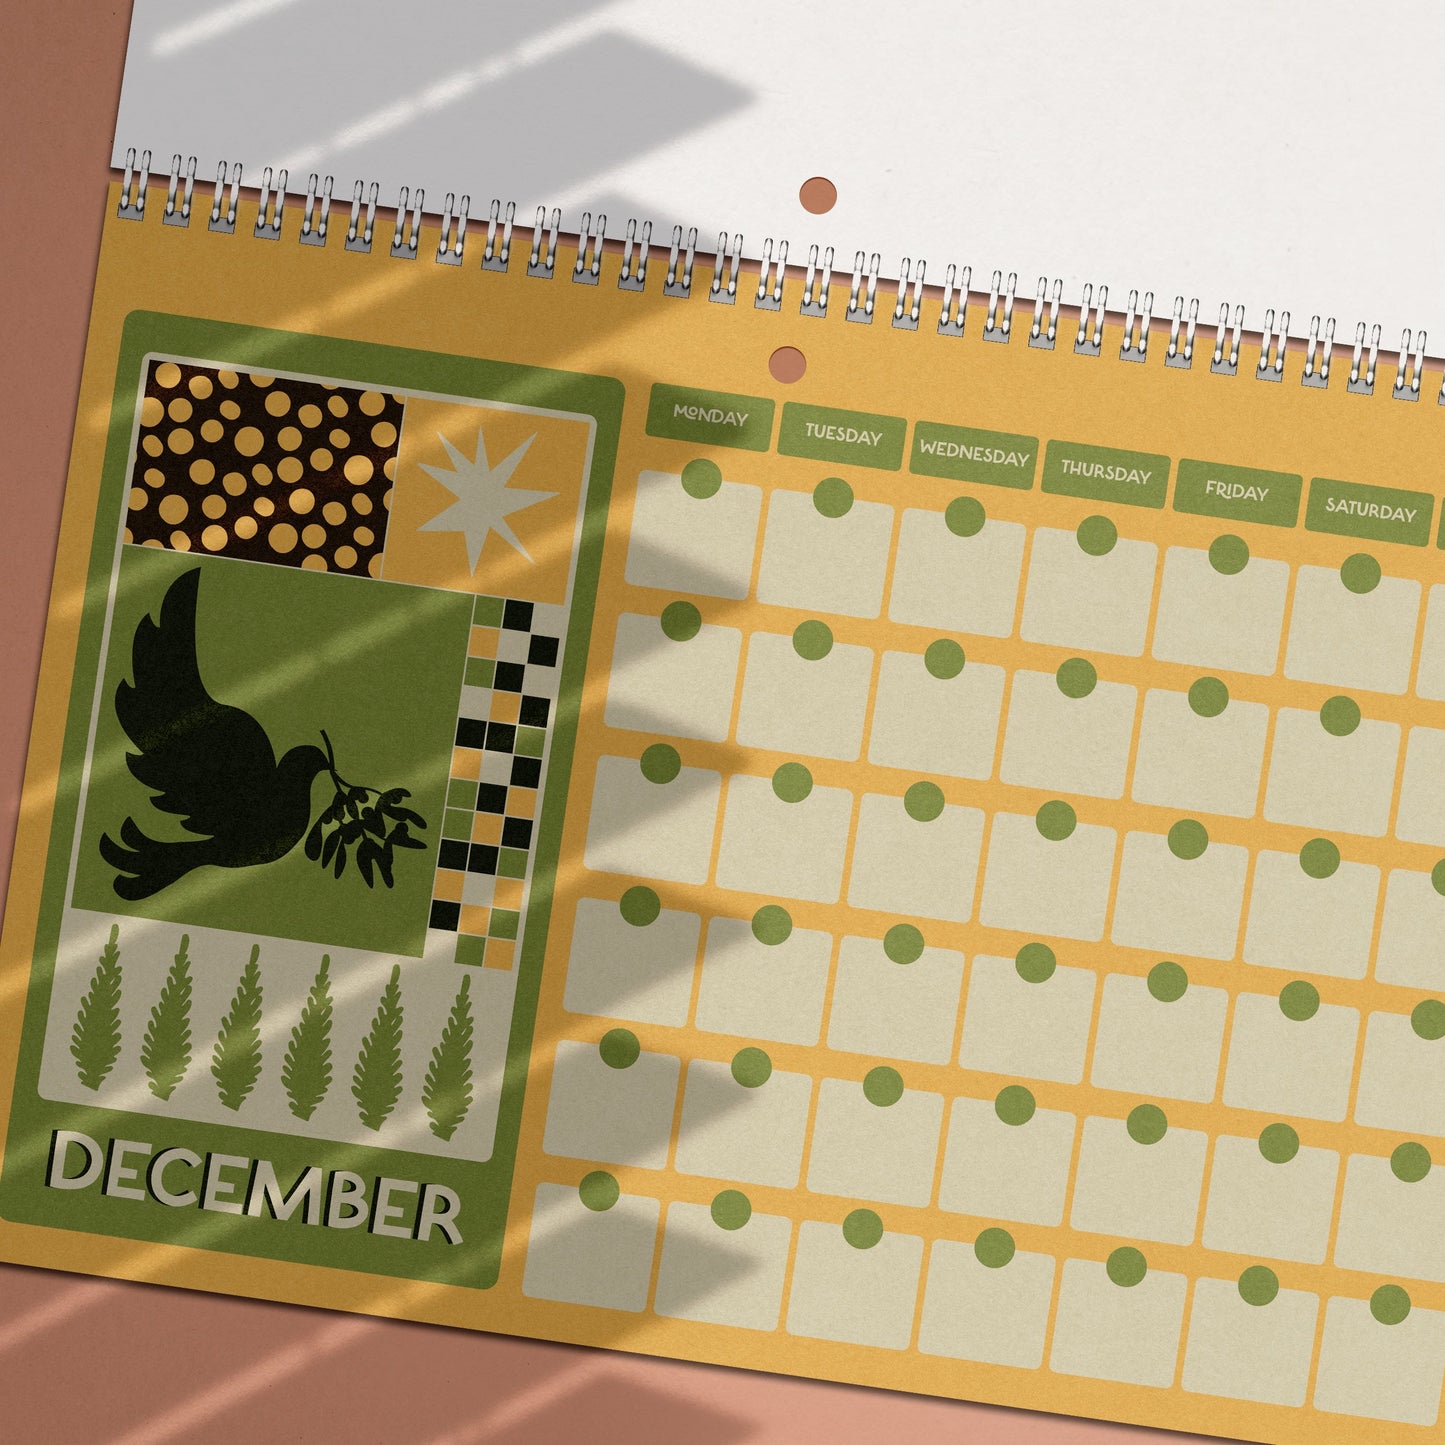 Undated Monthly Calendar | Wall Planner | Matisse Inspired | A4 Landscape | 12 month wirebound hanging calendar-9